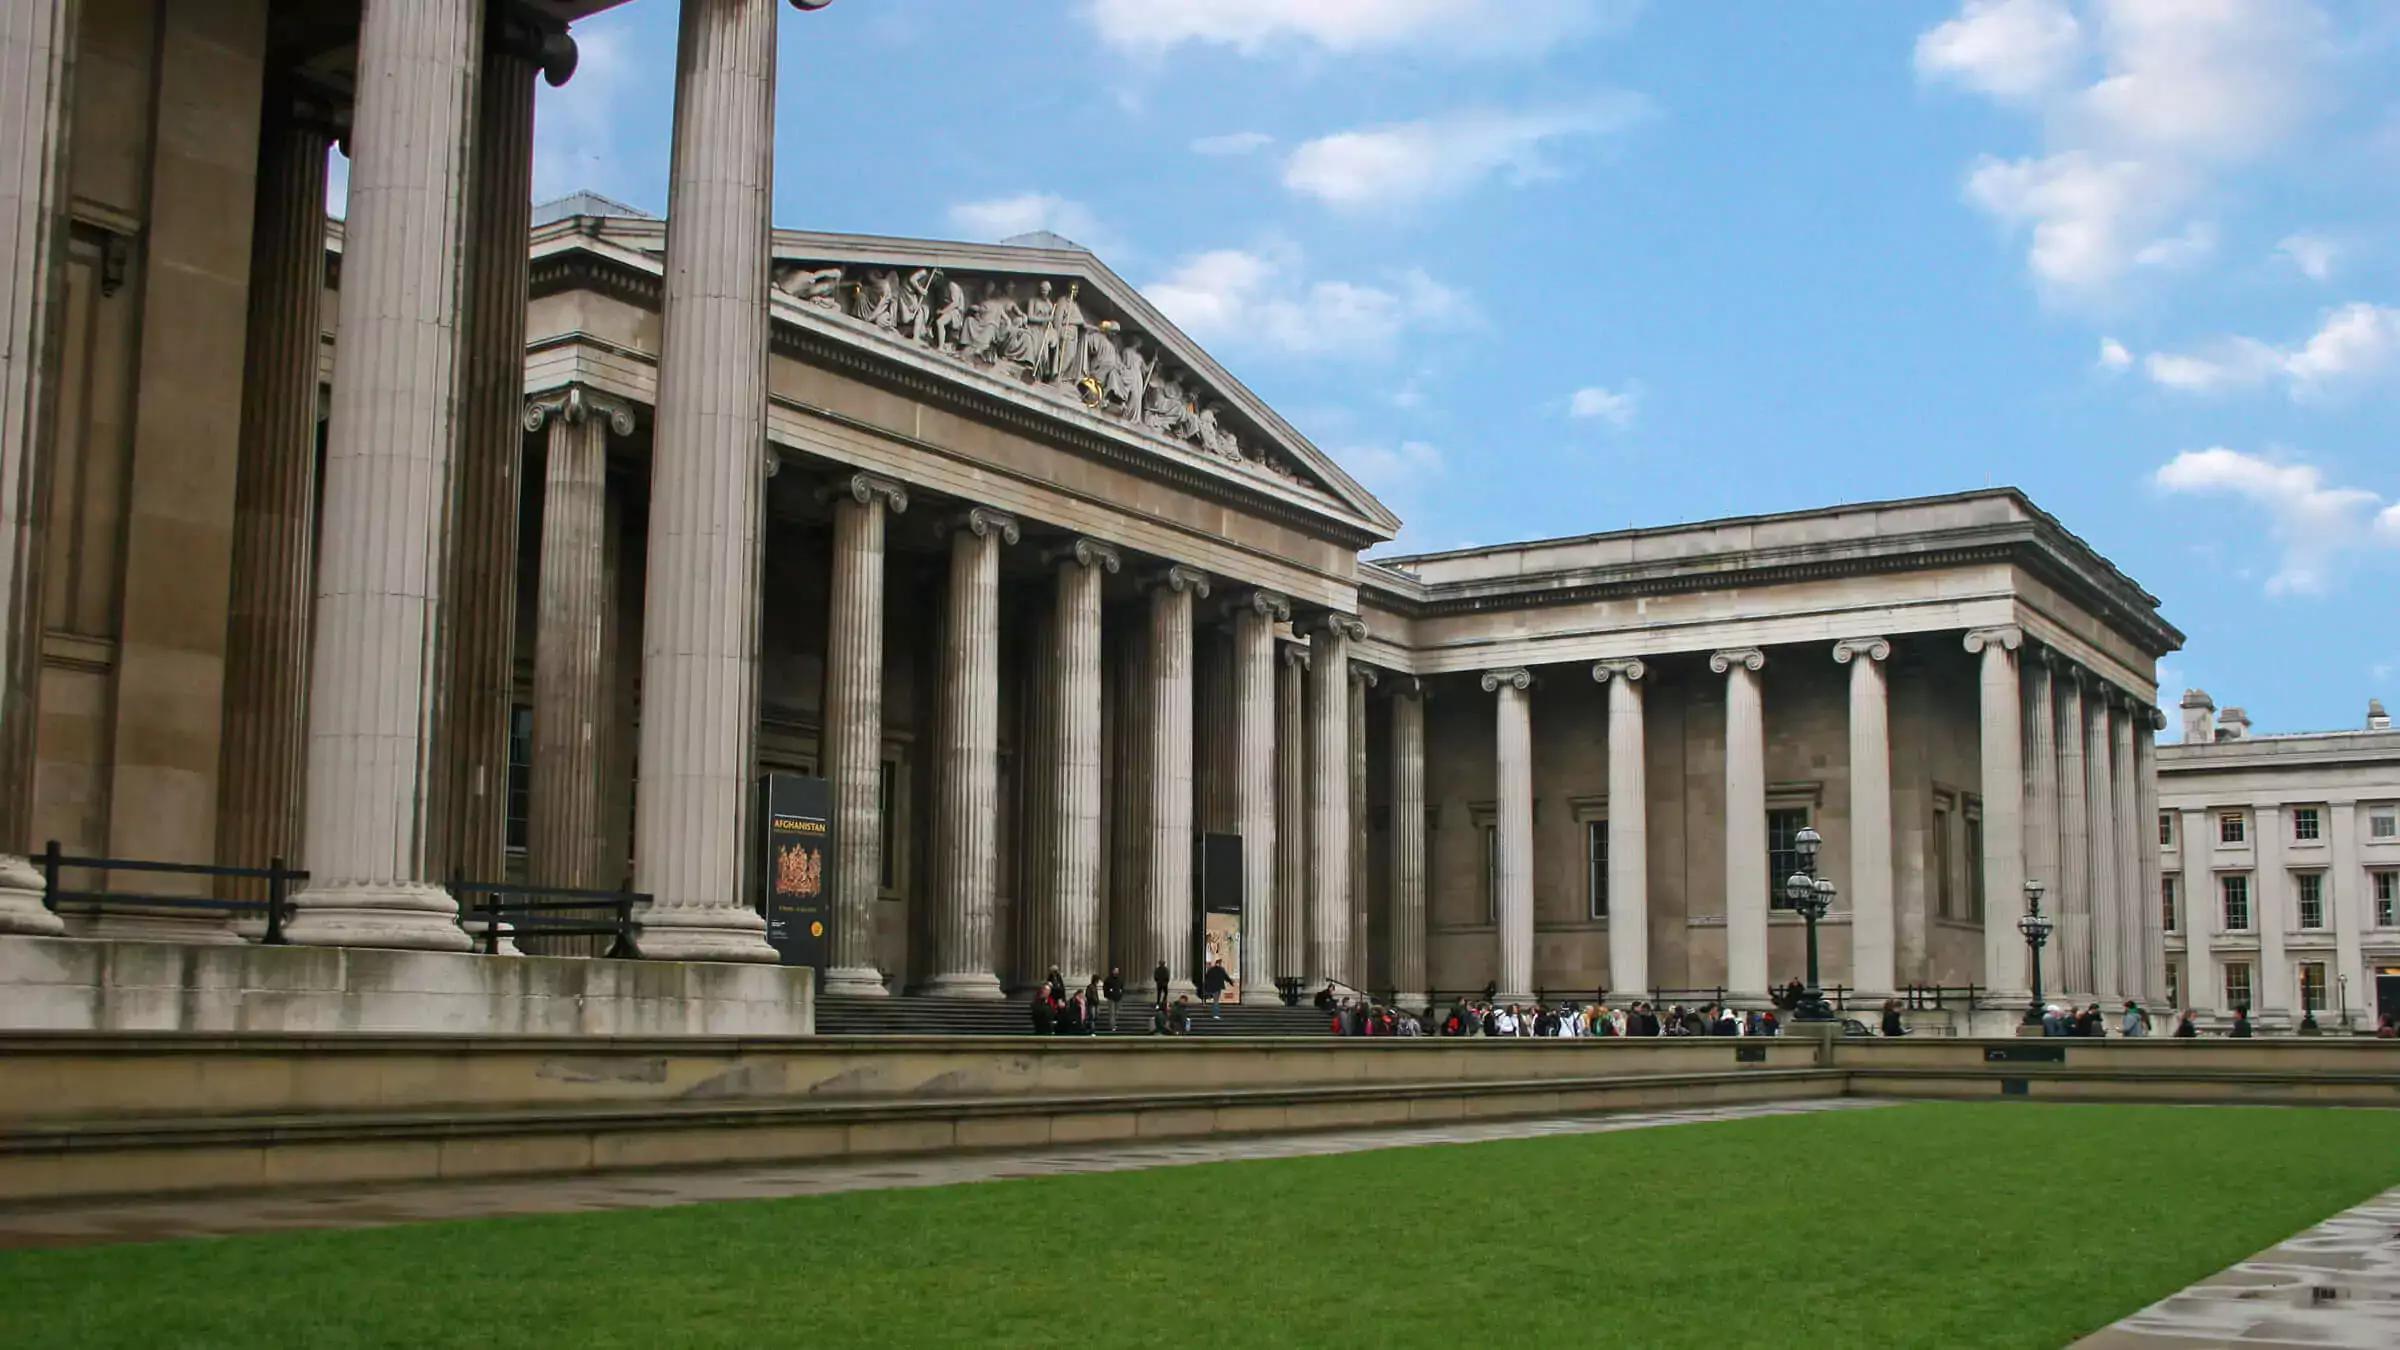 British Museum in London, UK